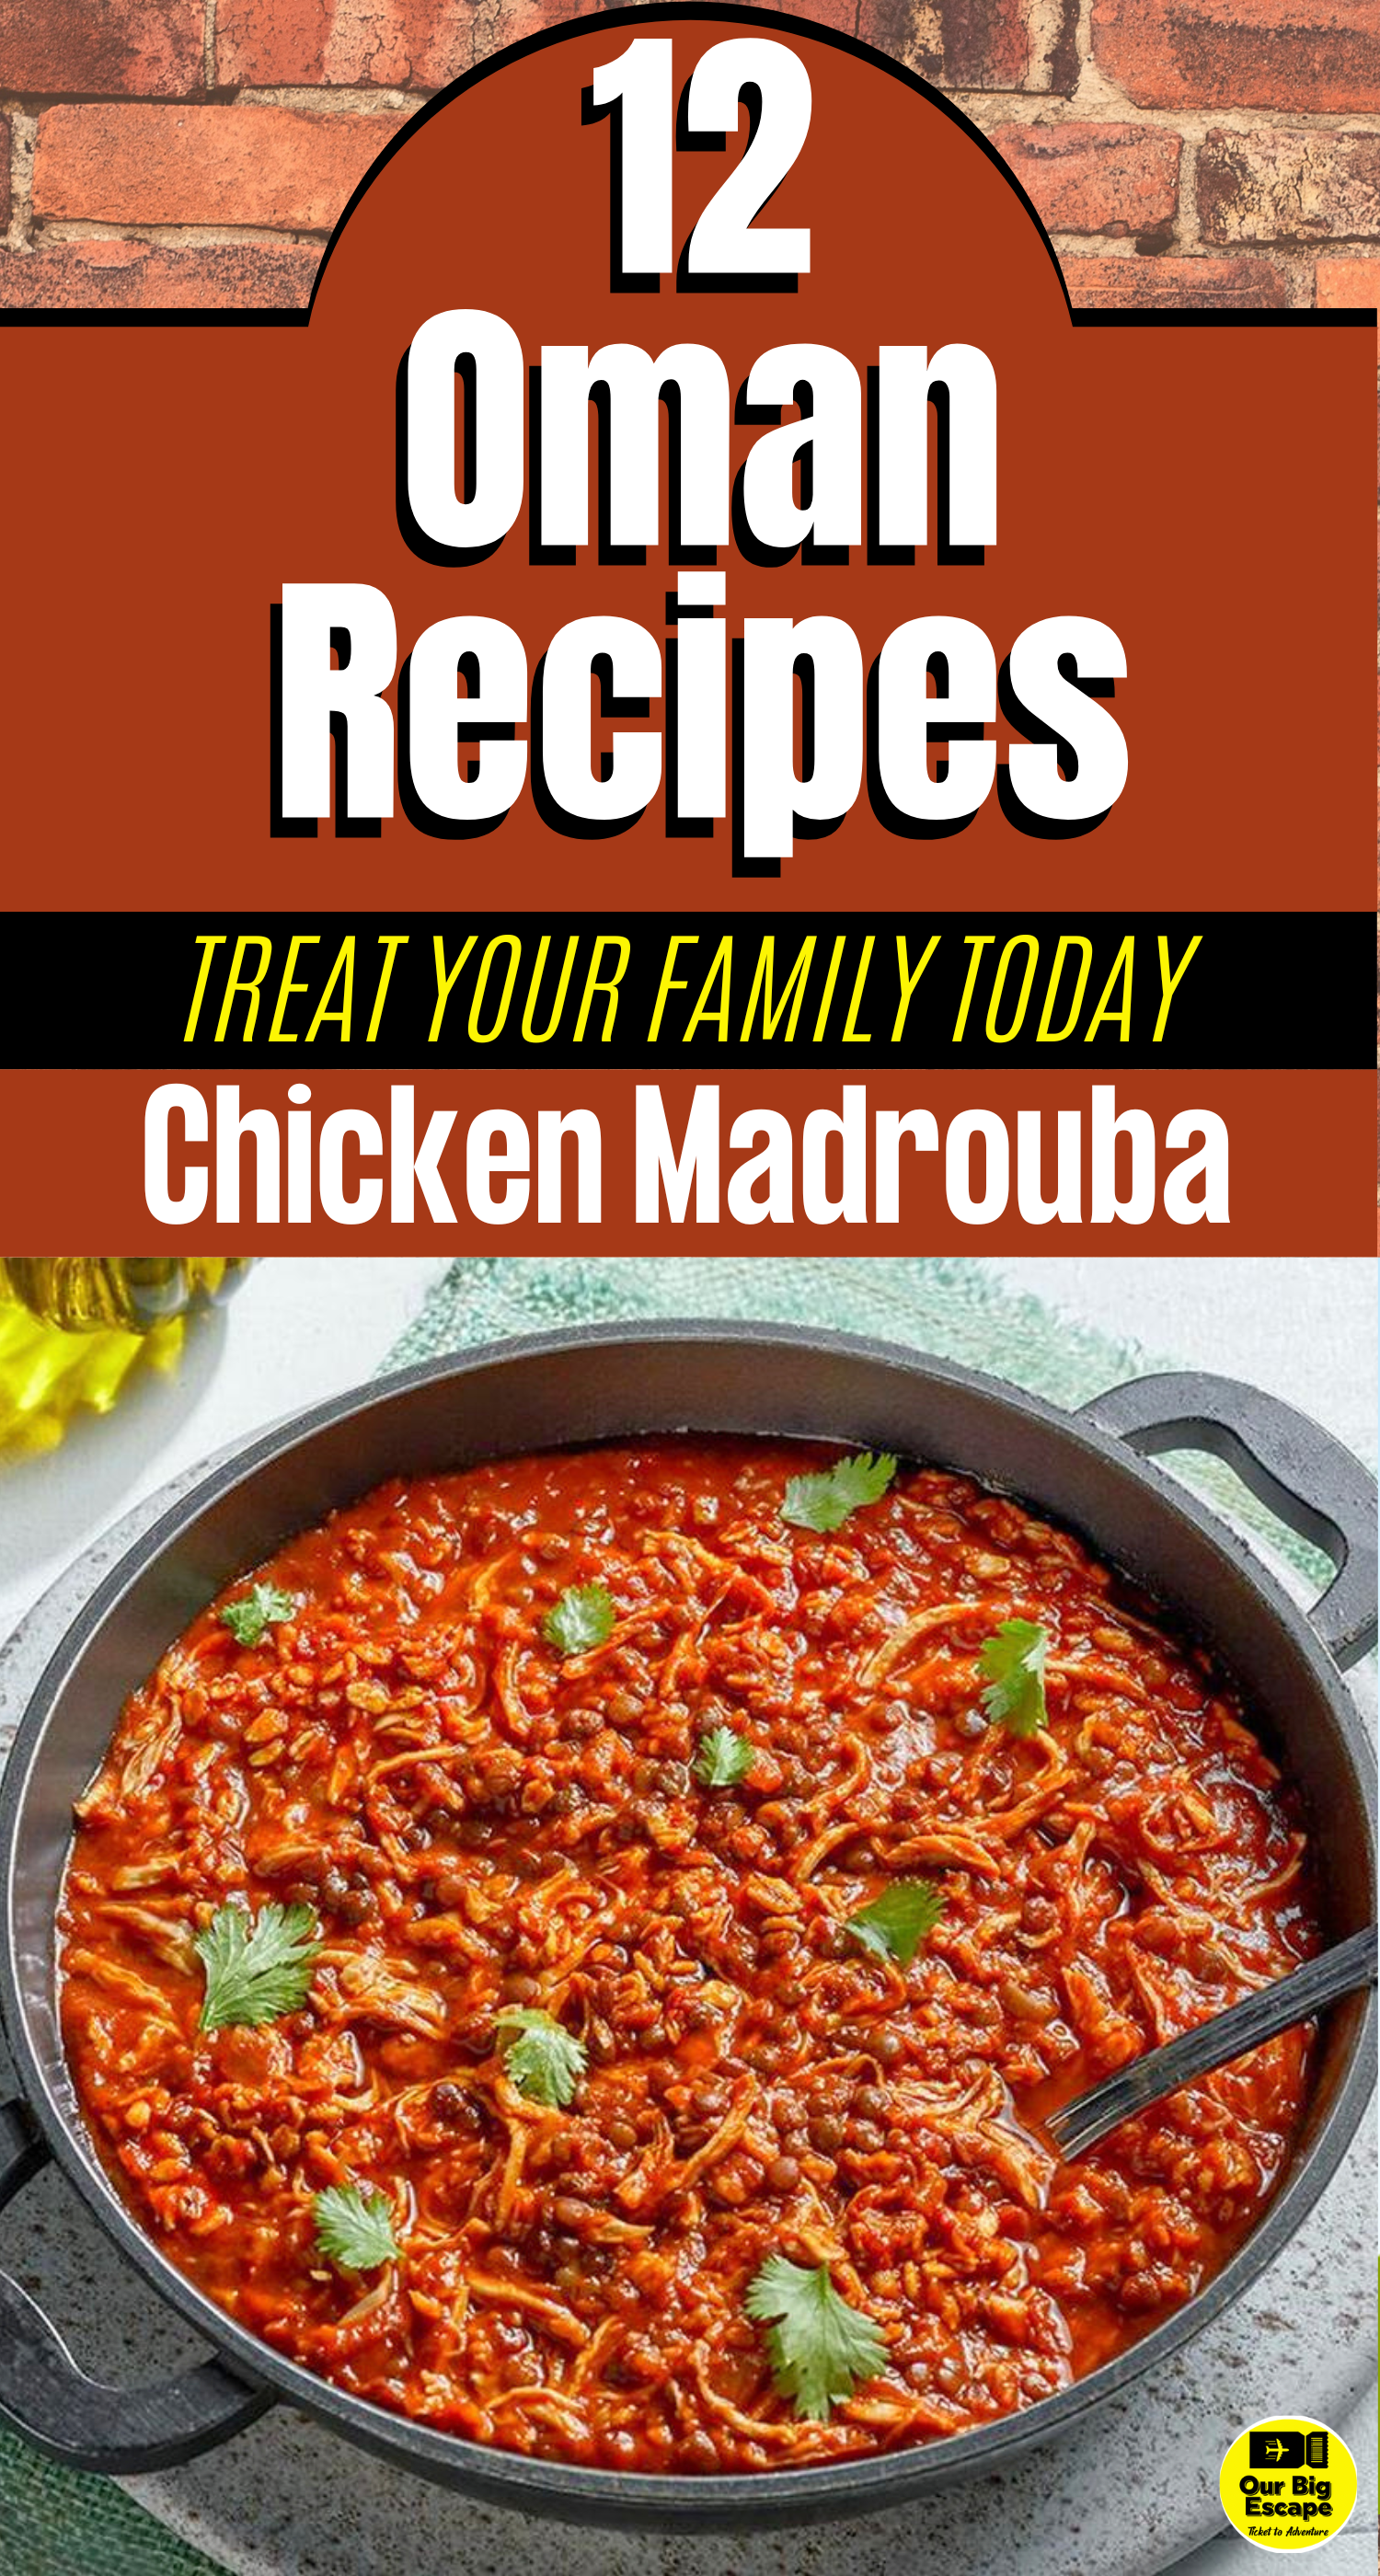 12 Oman Recipes - Chicken Madrouba